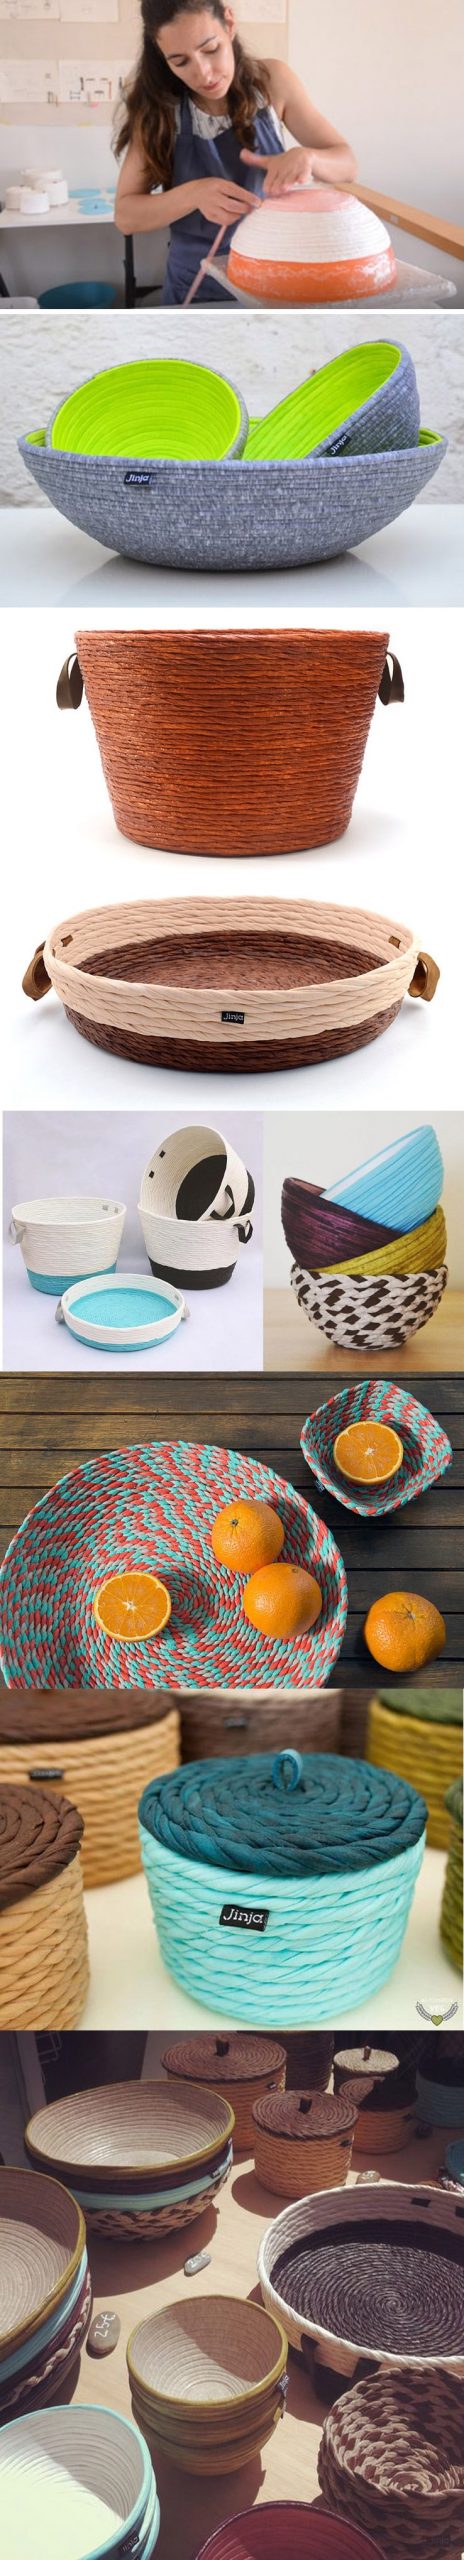 Jinja produz objetos de decoração a partir do desperdício têxtil 2